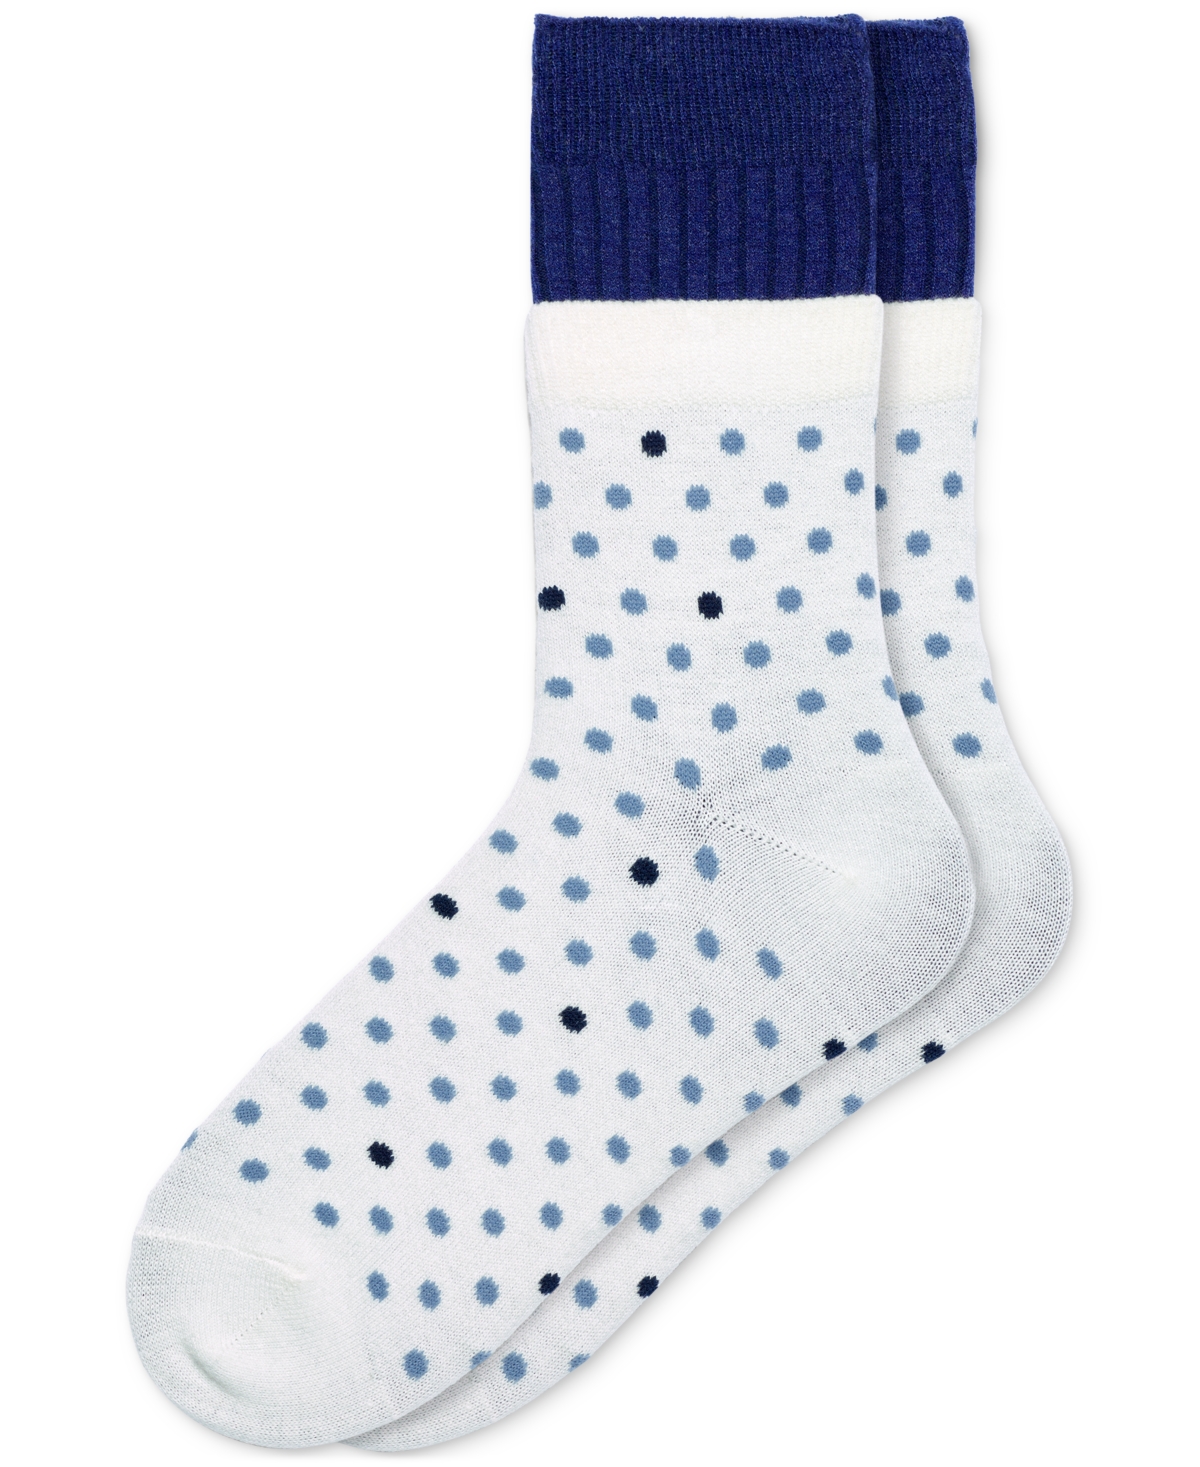 Hue Women's 2-pk. Layered Look Socks In Dots Pack